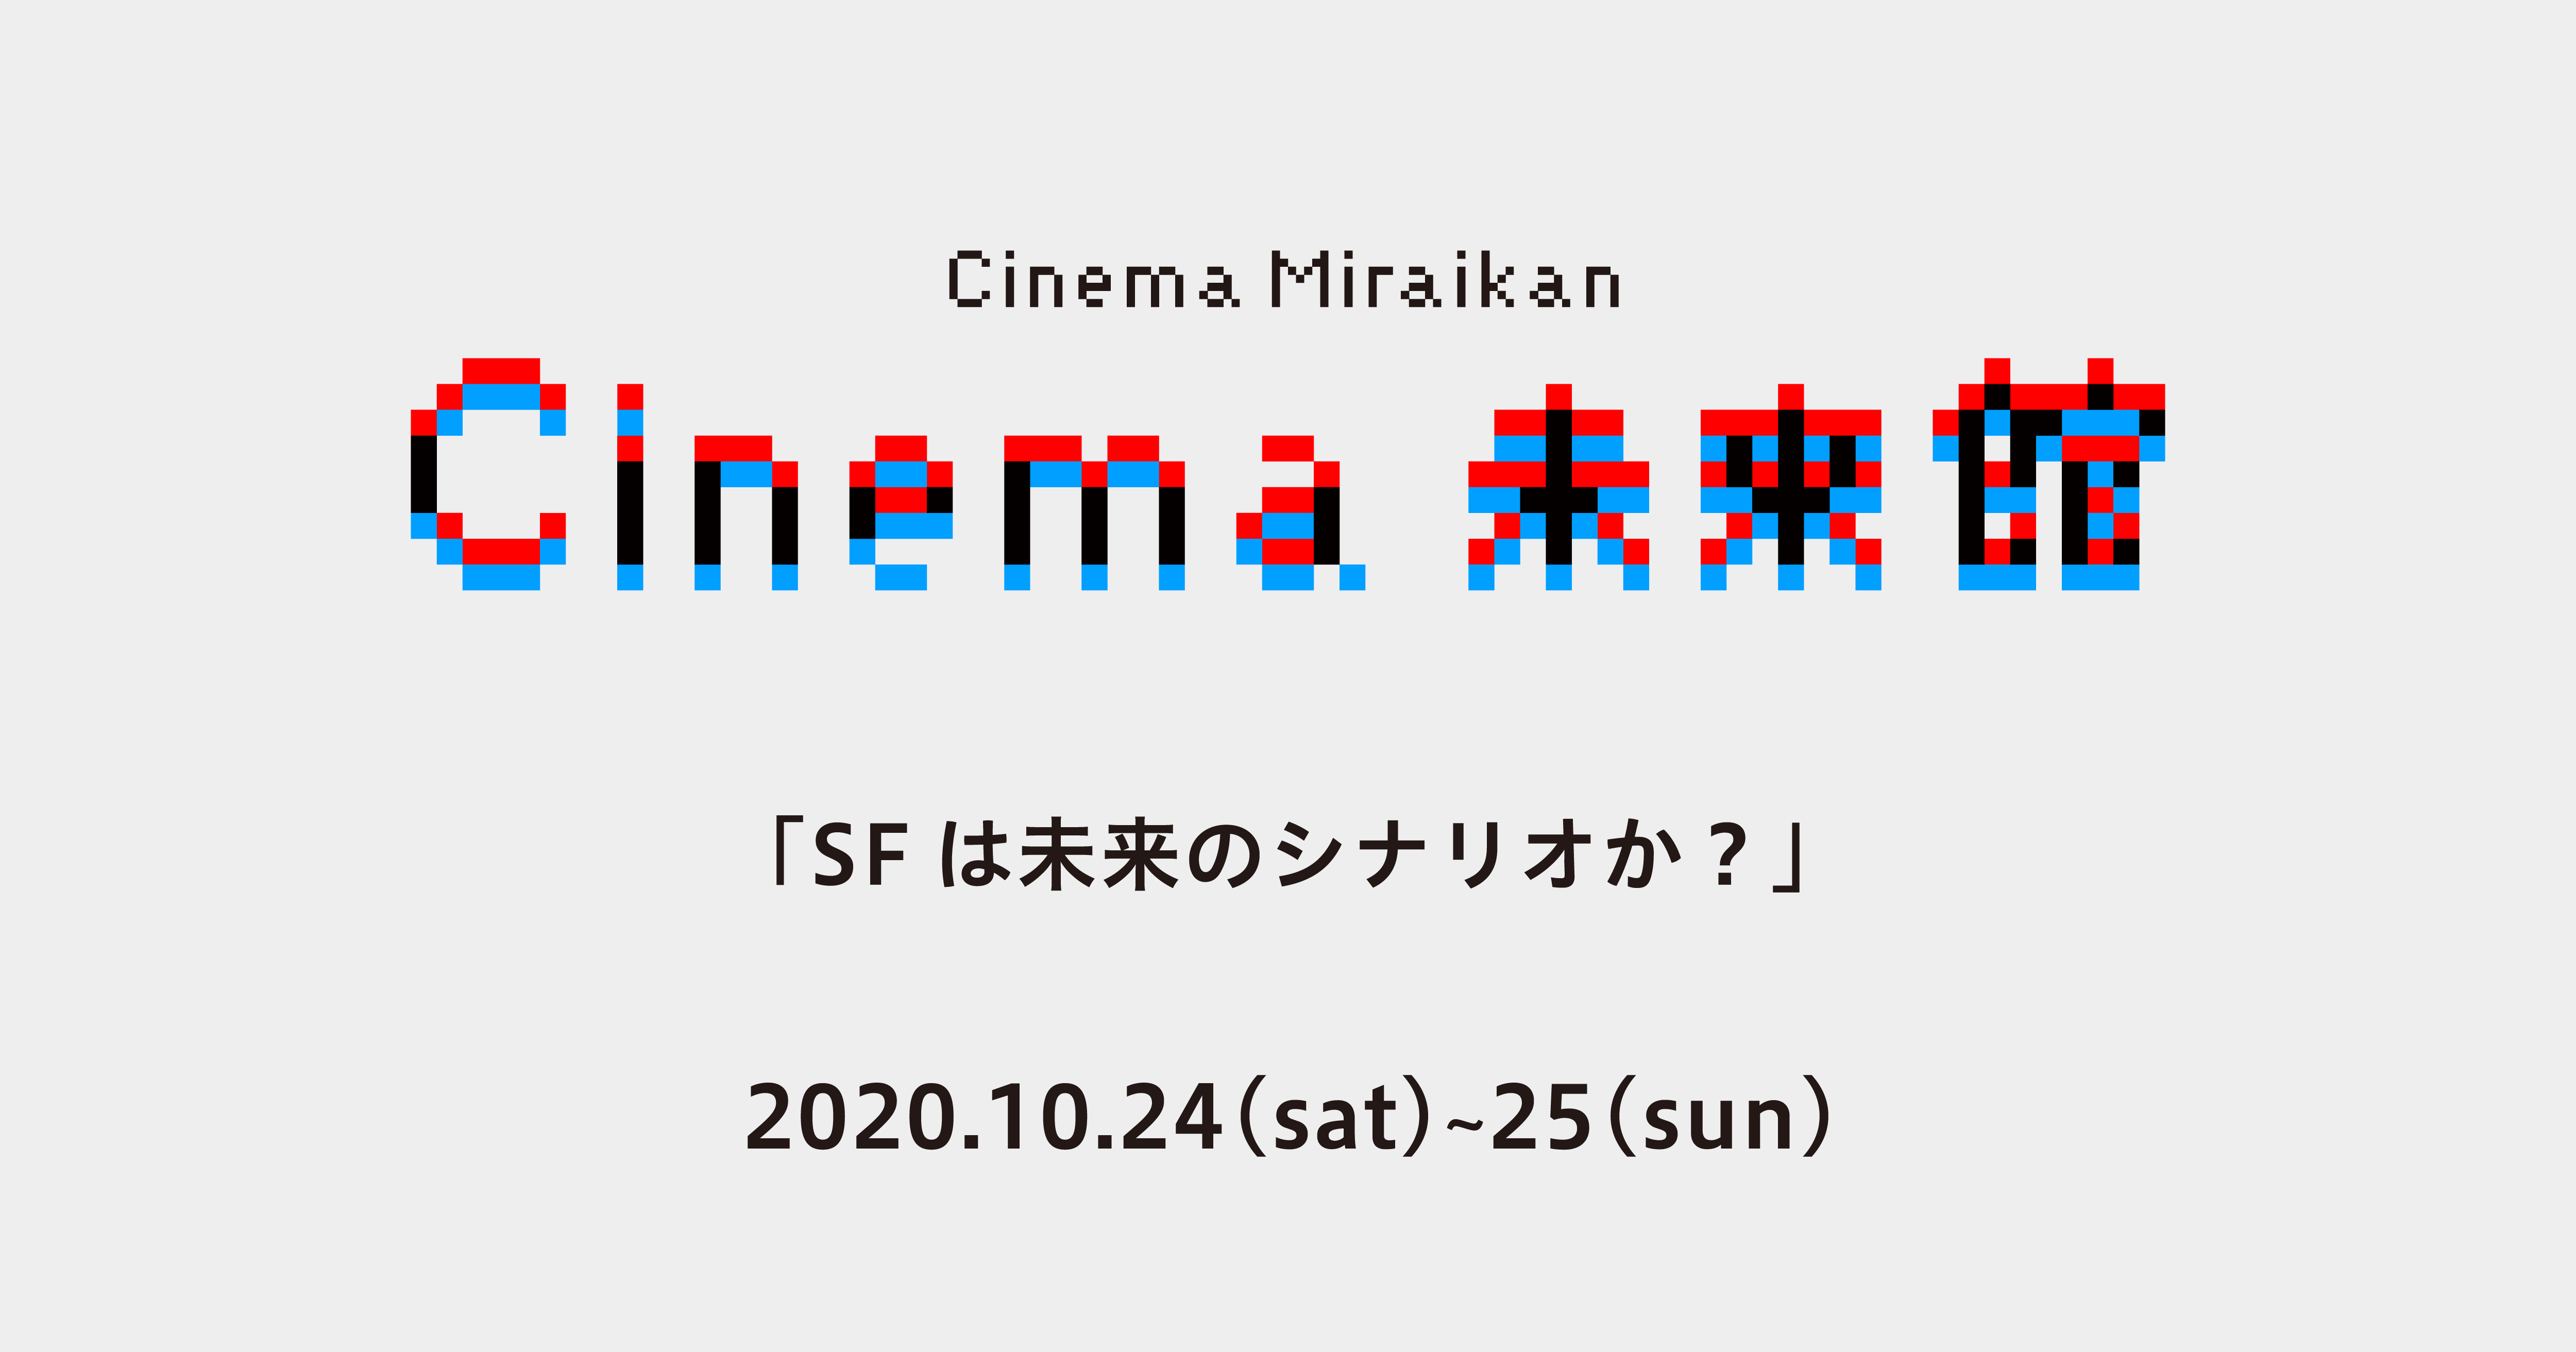 Sf映画から情報や生命の未来を考える映像祭 Cinema未来館 10月24 25日に開催 国立研究開発法人科学技術振興機構 日本科学未来館のプレスリリース